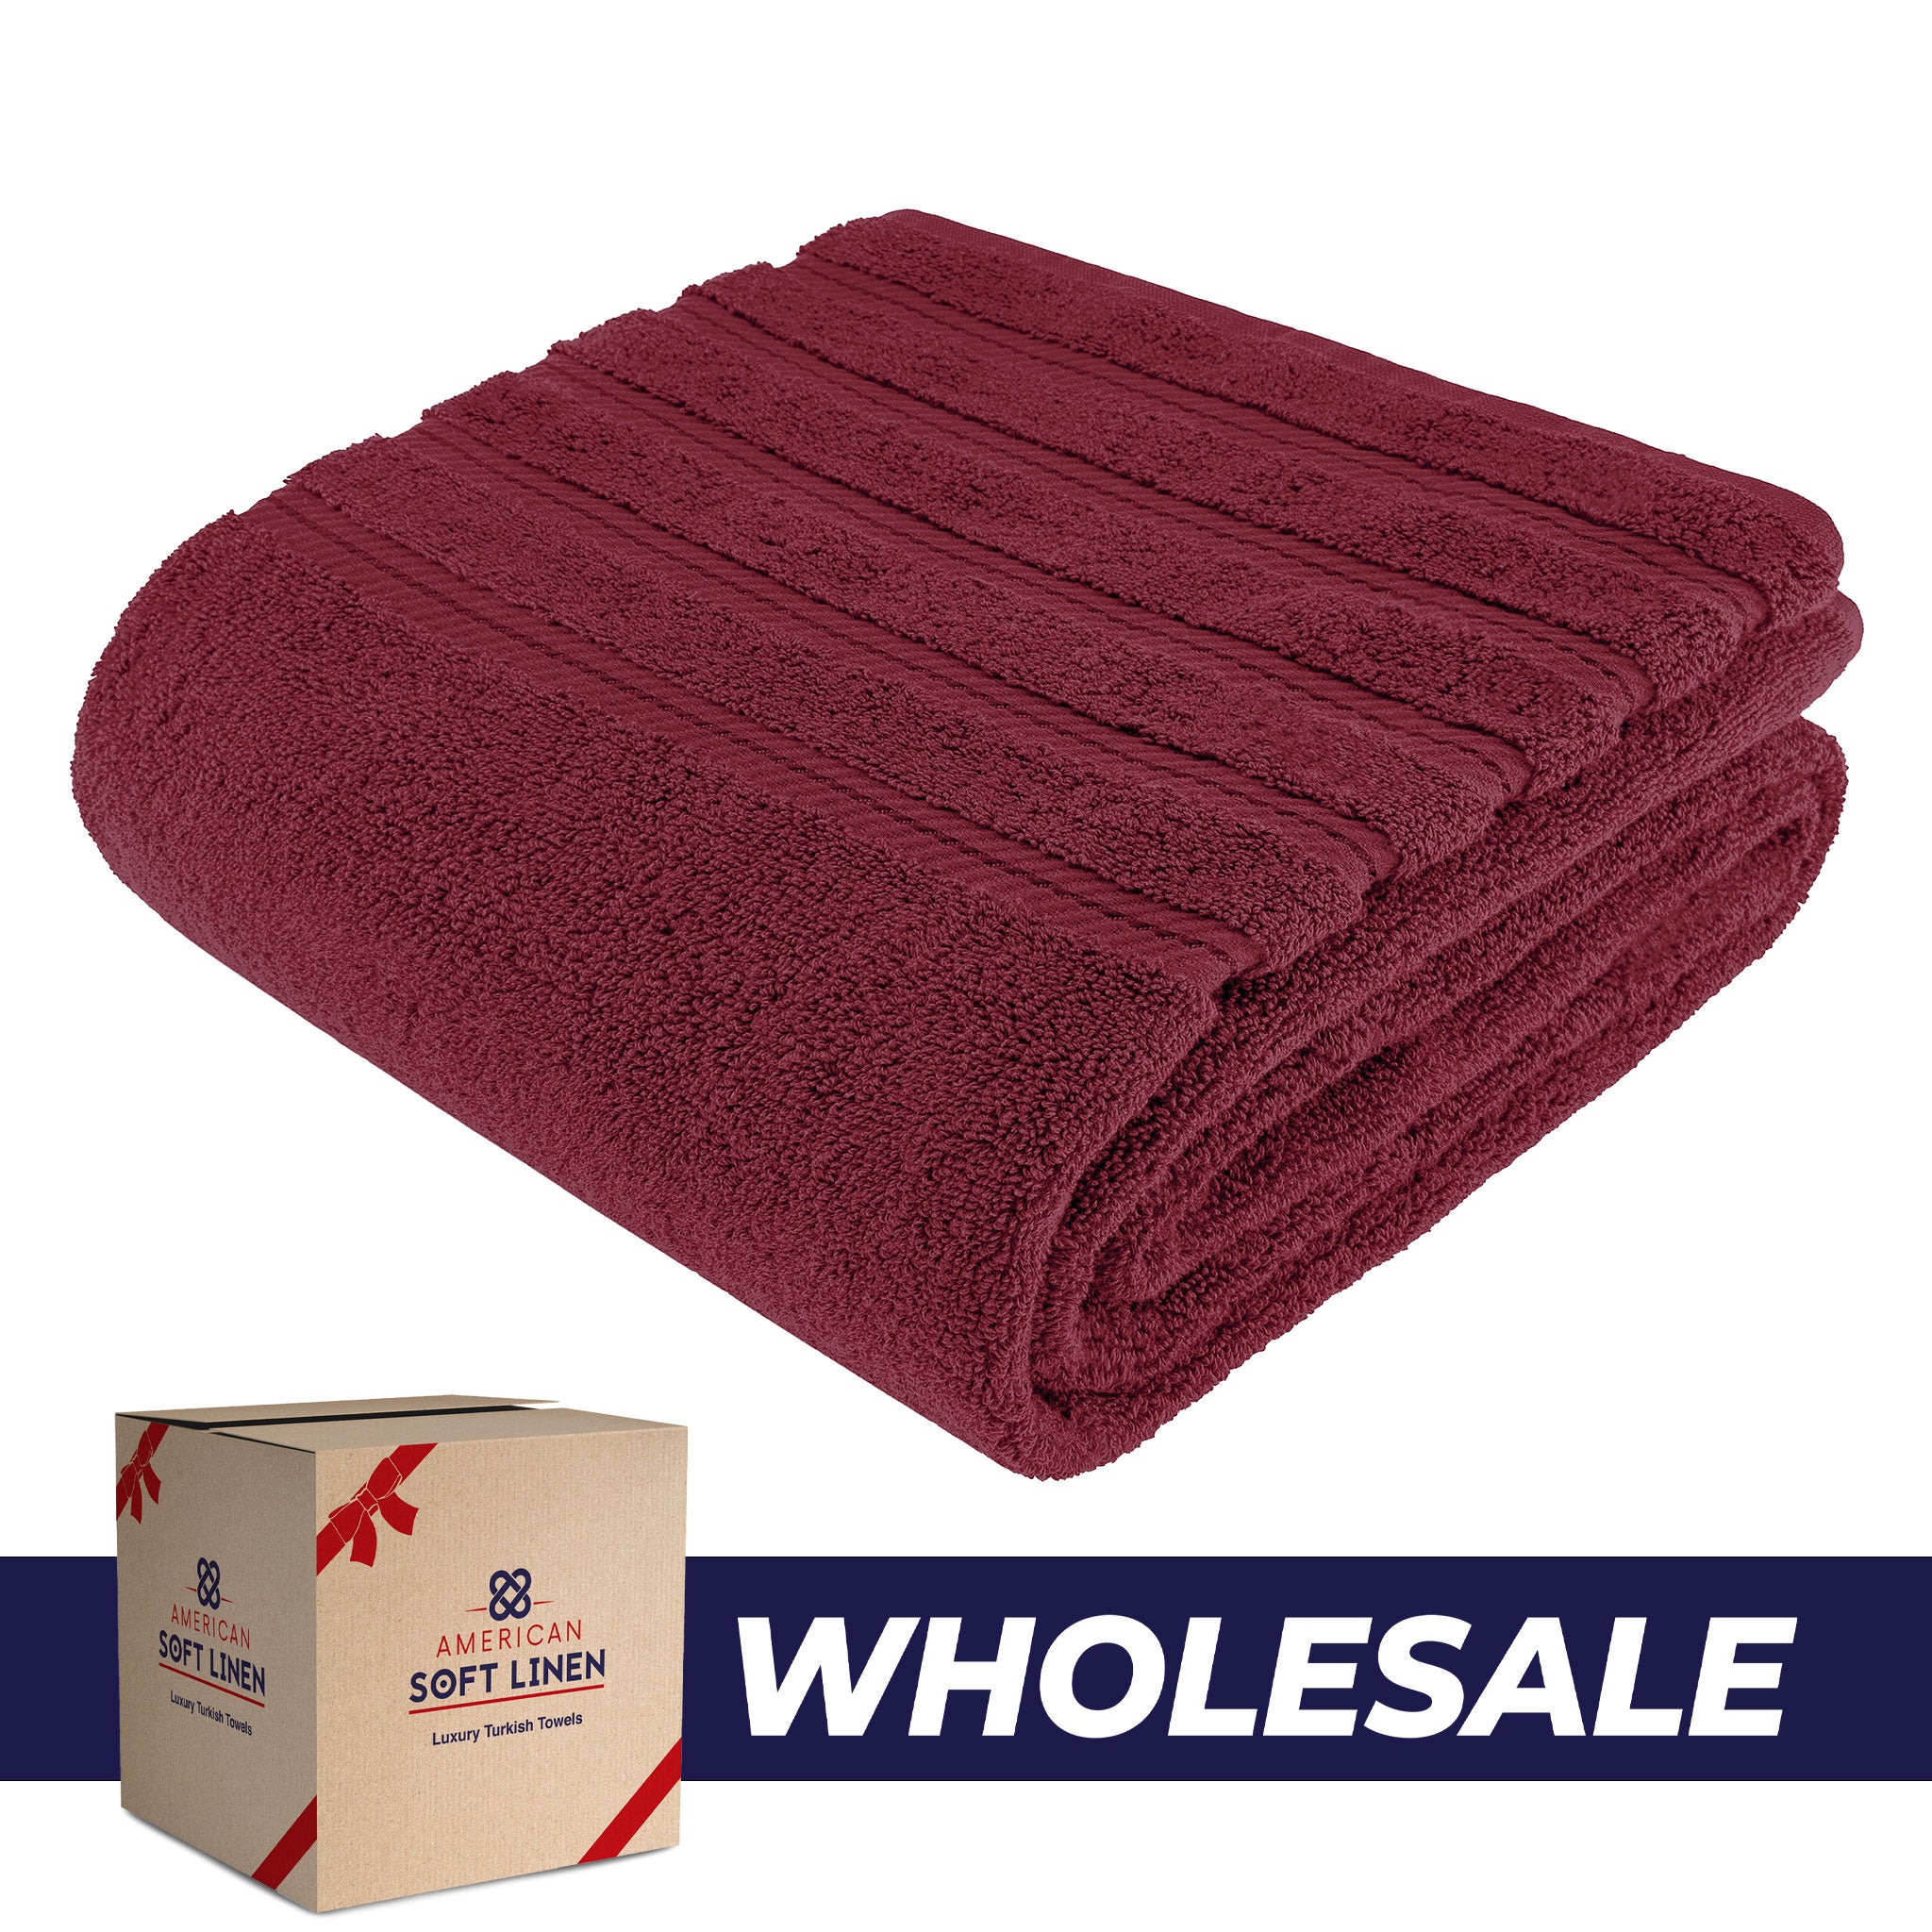 American Soft Linen - 35x70 Jumbo Bath Sheet Turkish Bath Towel - 16 Piece Case Pack - Bordeaux-Red - 0